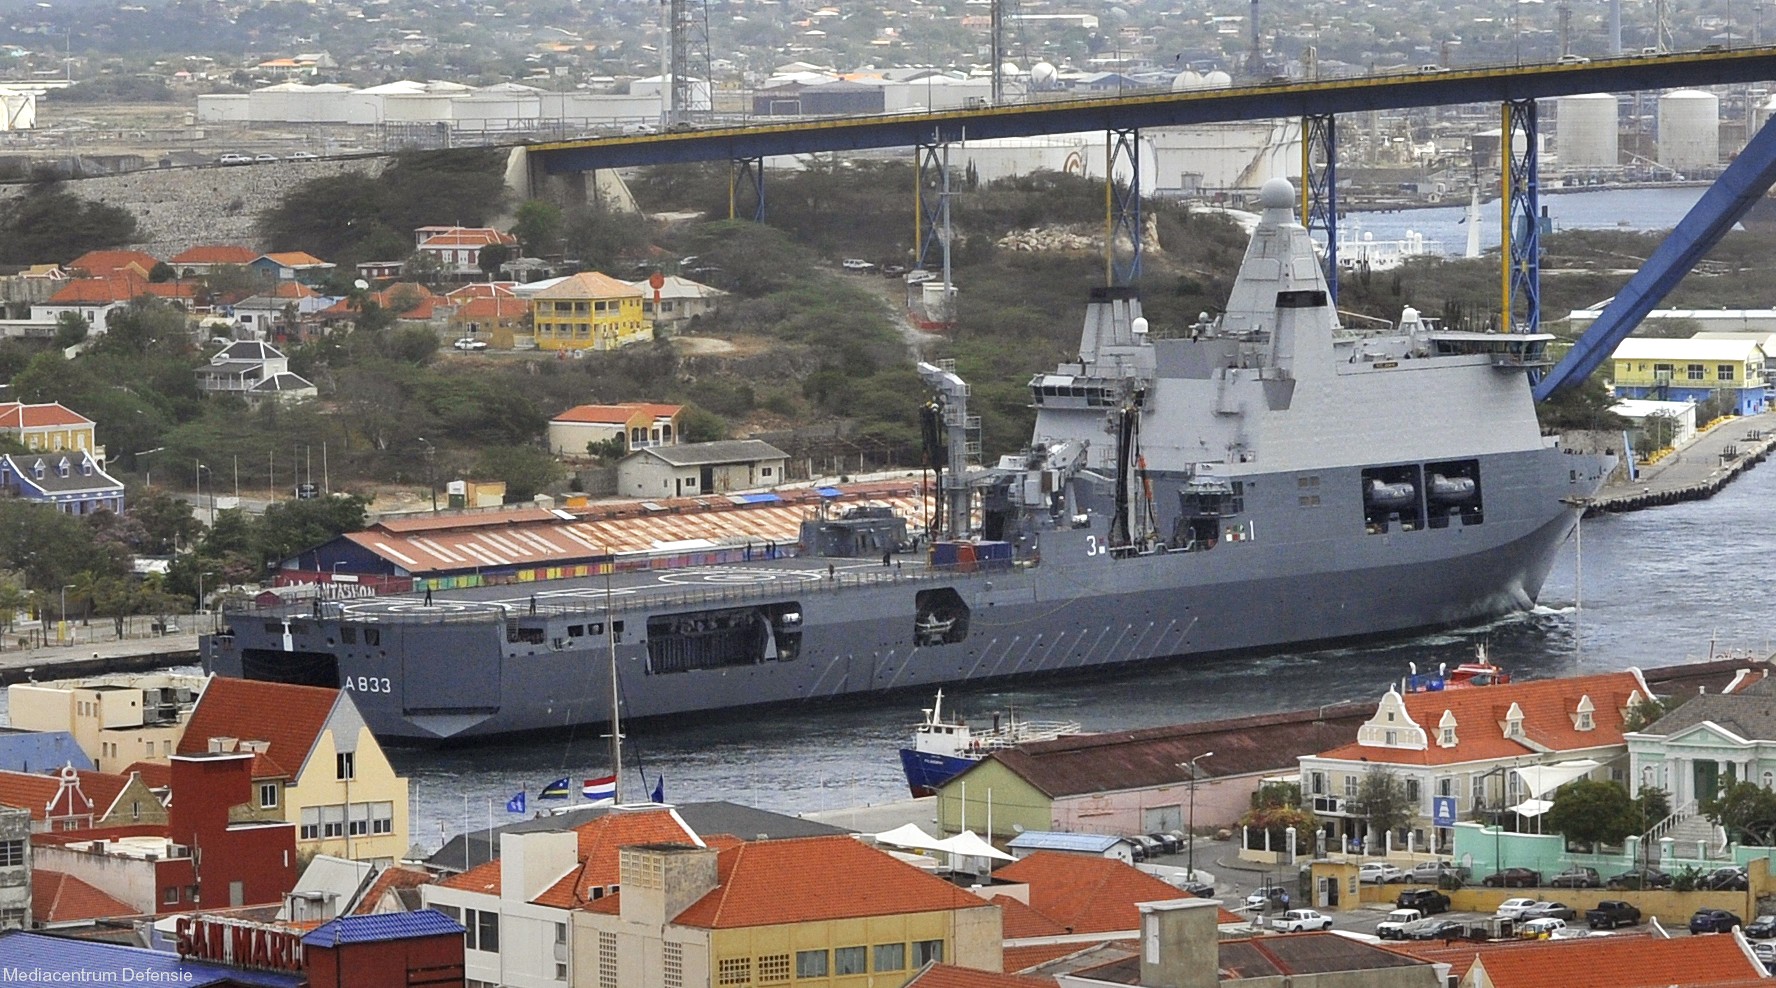 a-833 hnlms karel doorman joint support ship royal netherlands navy koninklijke marine 22